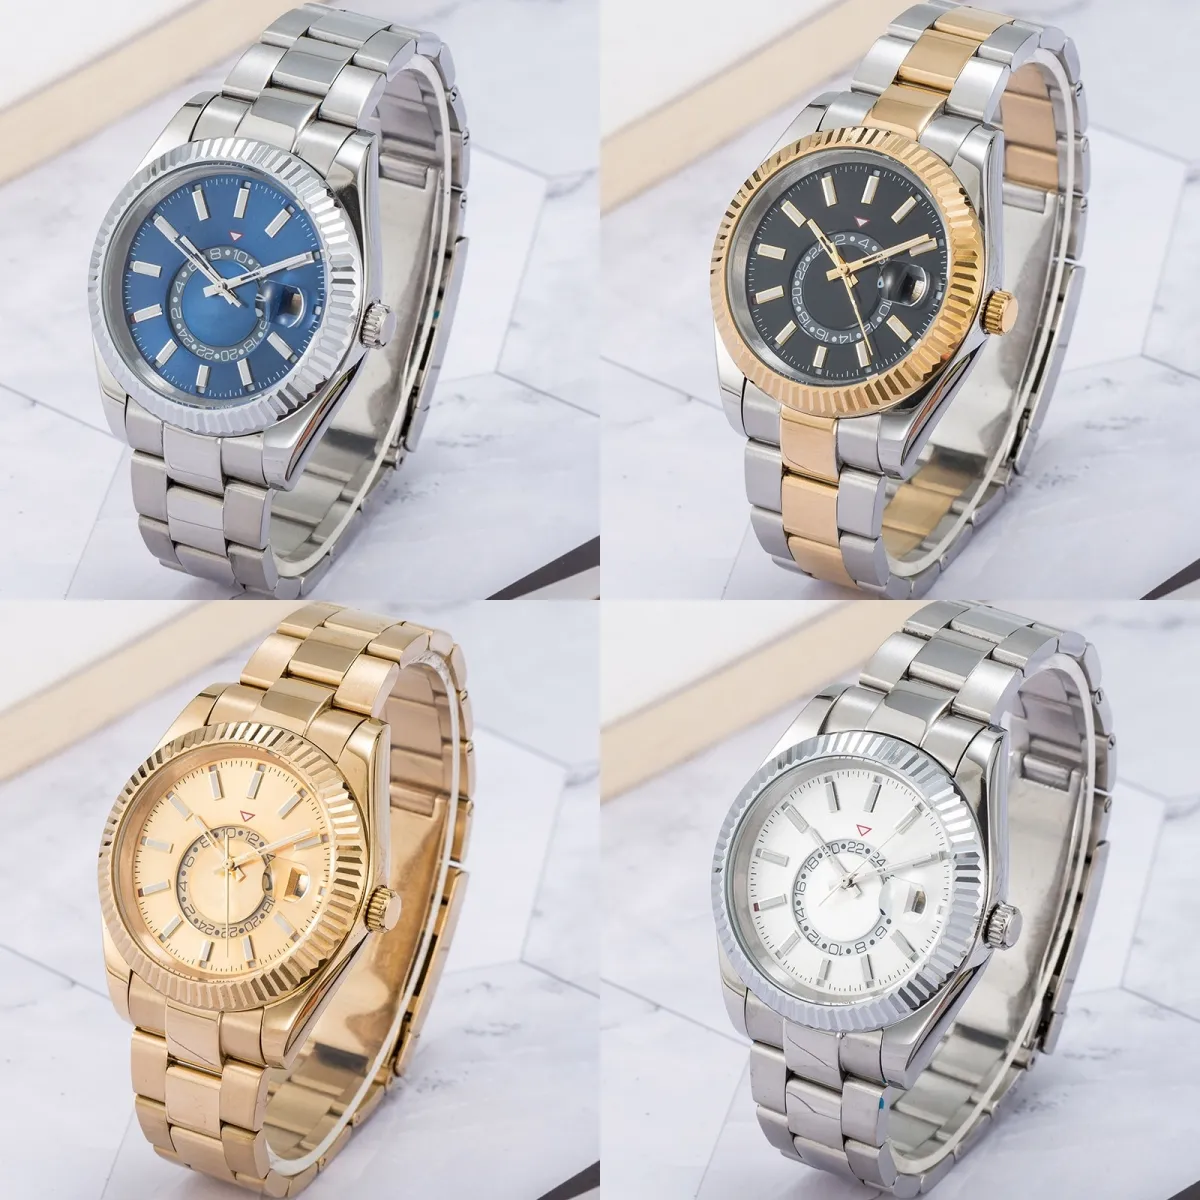 AAA-Uhr Montre de Luxe Herren automatische mechanische Uhren 42 mm komplett aus Edelstahl Schwimmarmbanduhren Saphir leuchtender SKY-Kalender